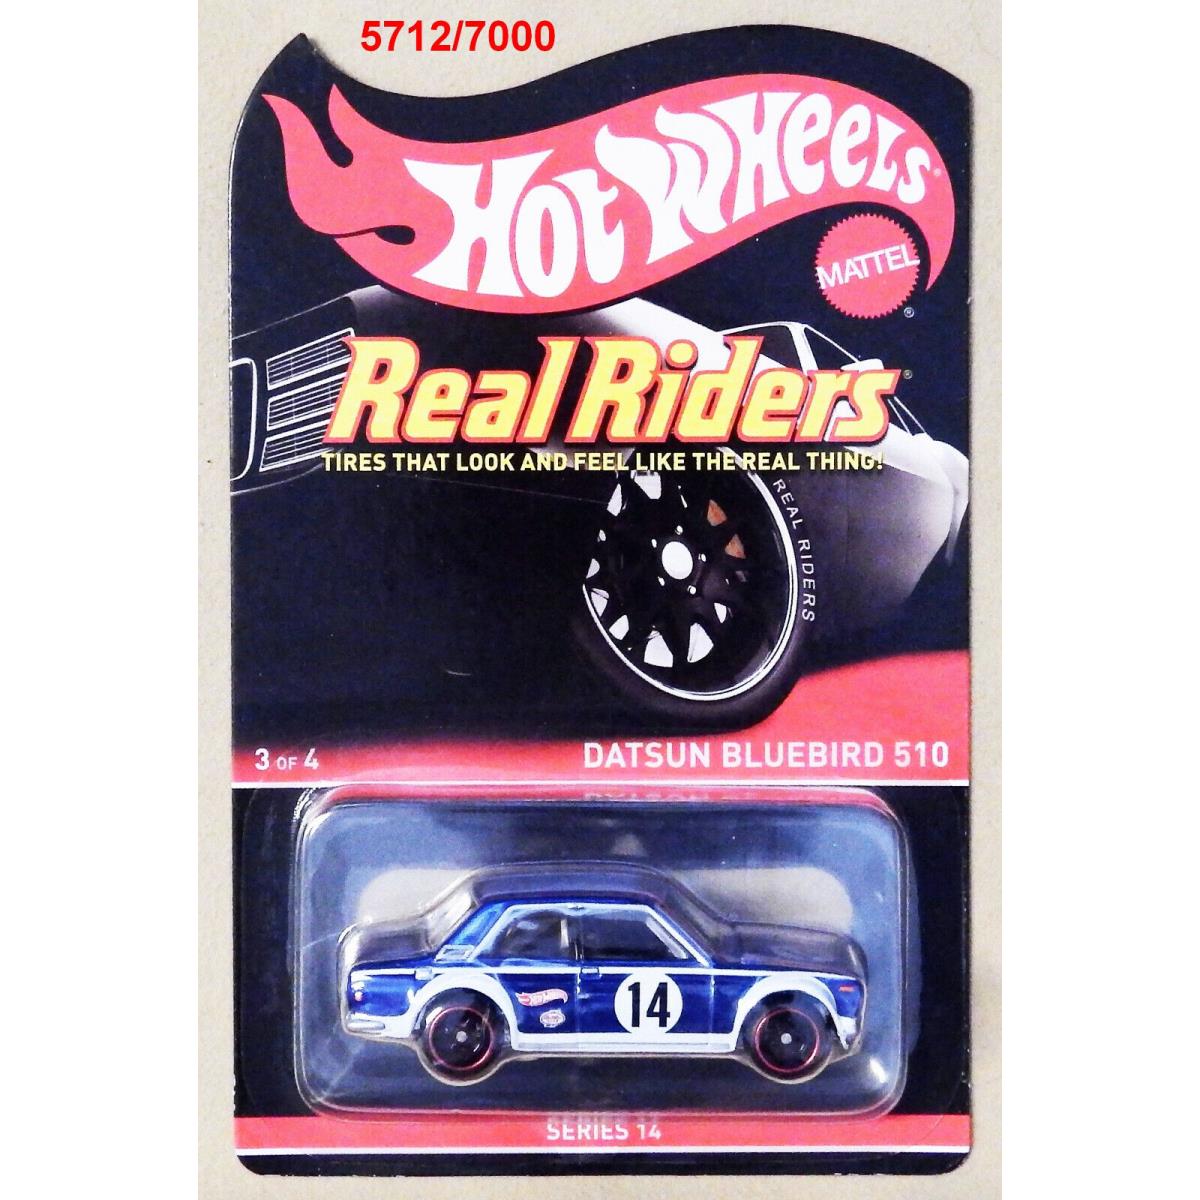 Hot Wheels Rlc 1971 Datsun Bluebird 510 Pick Your Car S Red Line Club 2016-Blue 5712/7000